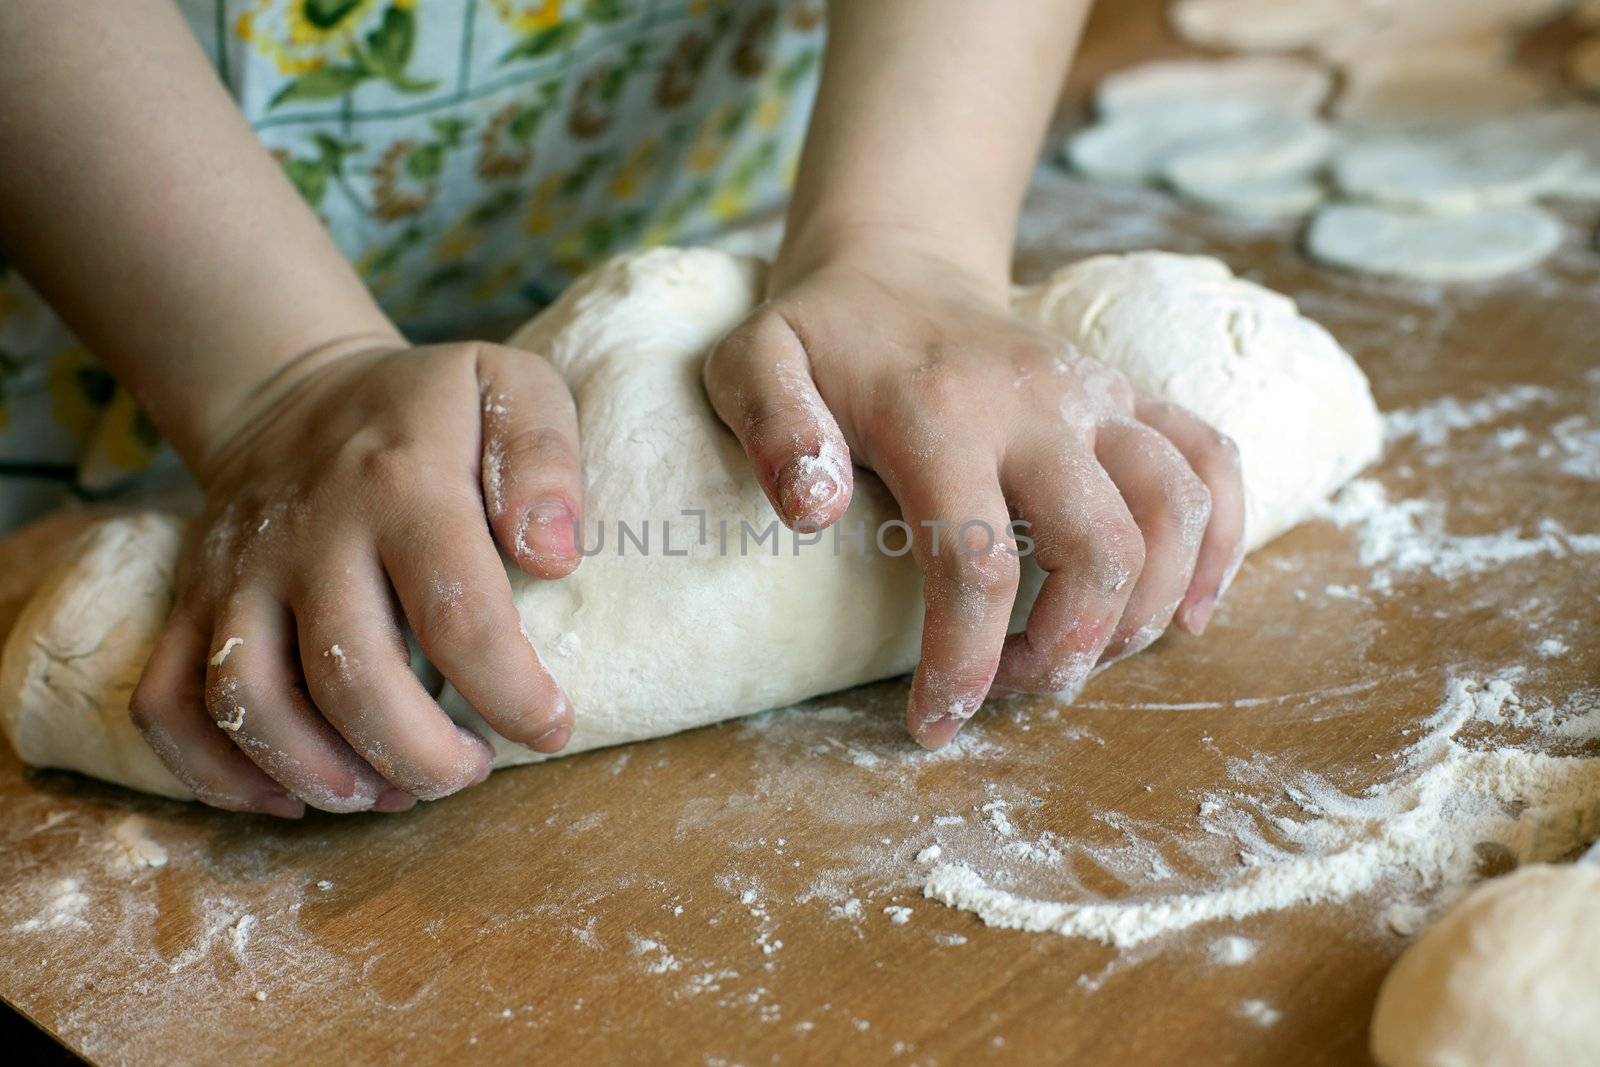 An image of hands making dough for dumplings